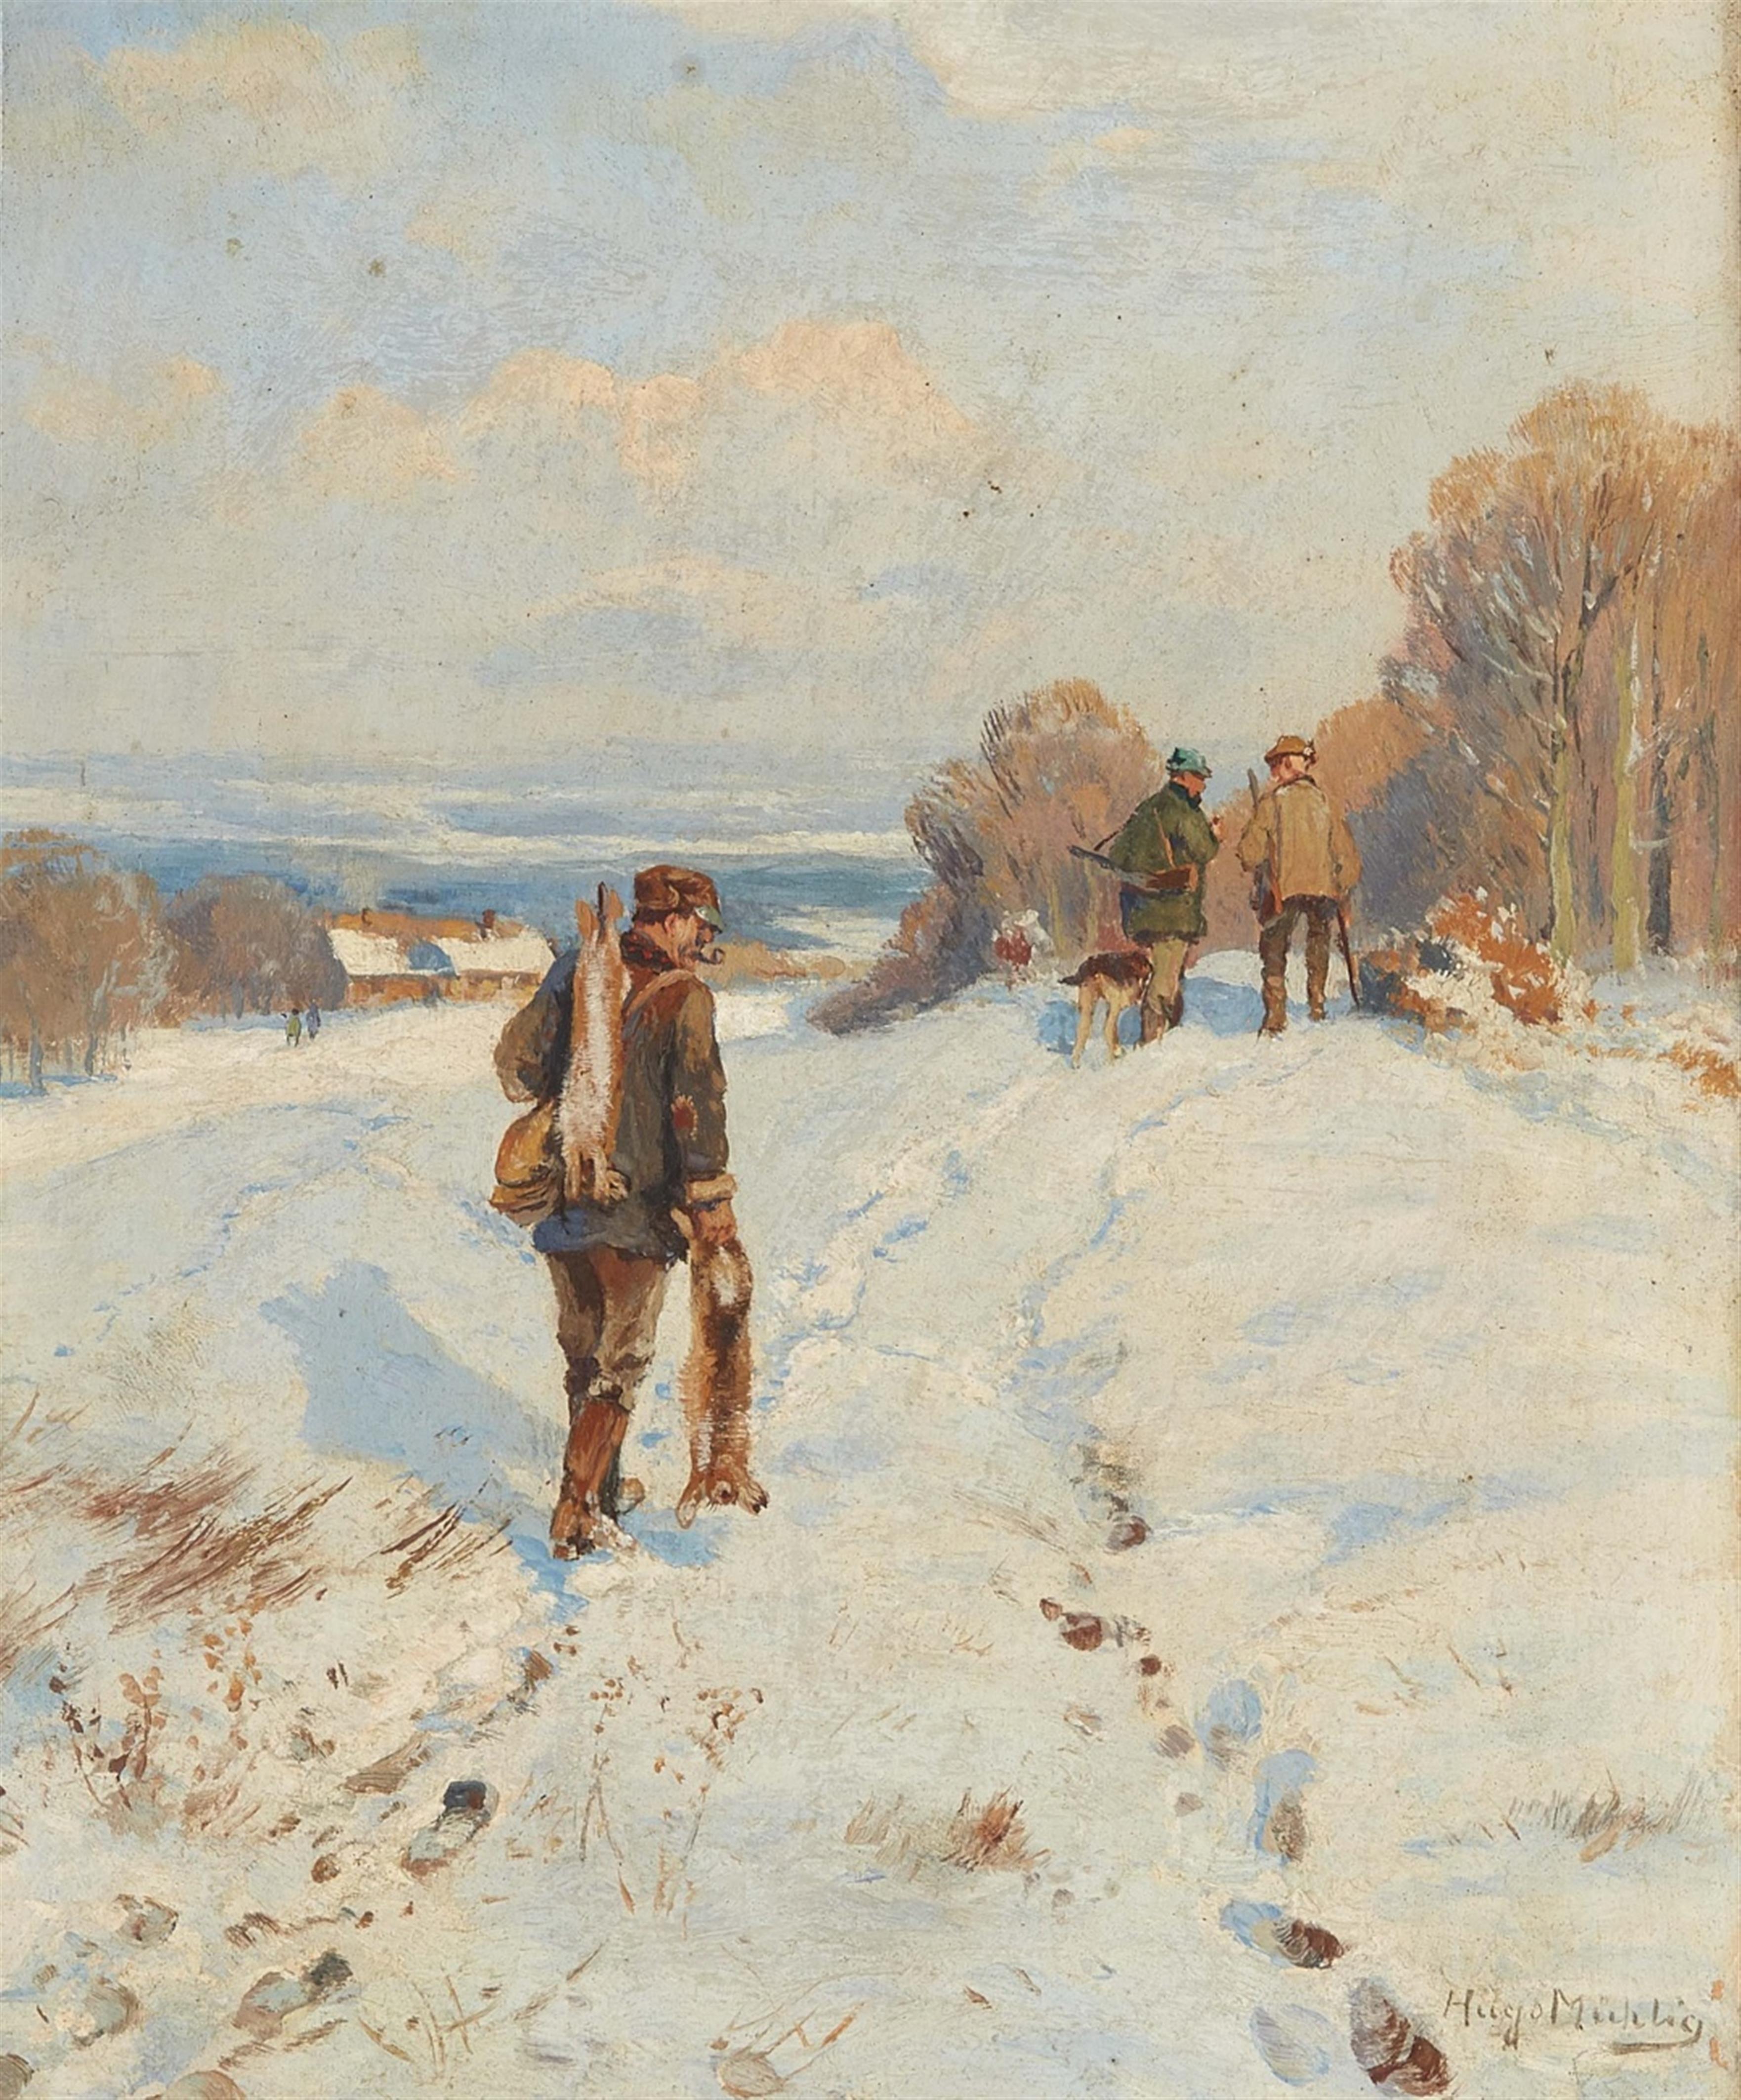 Hugo Mühlig - A Hunter in the Snow - image-1